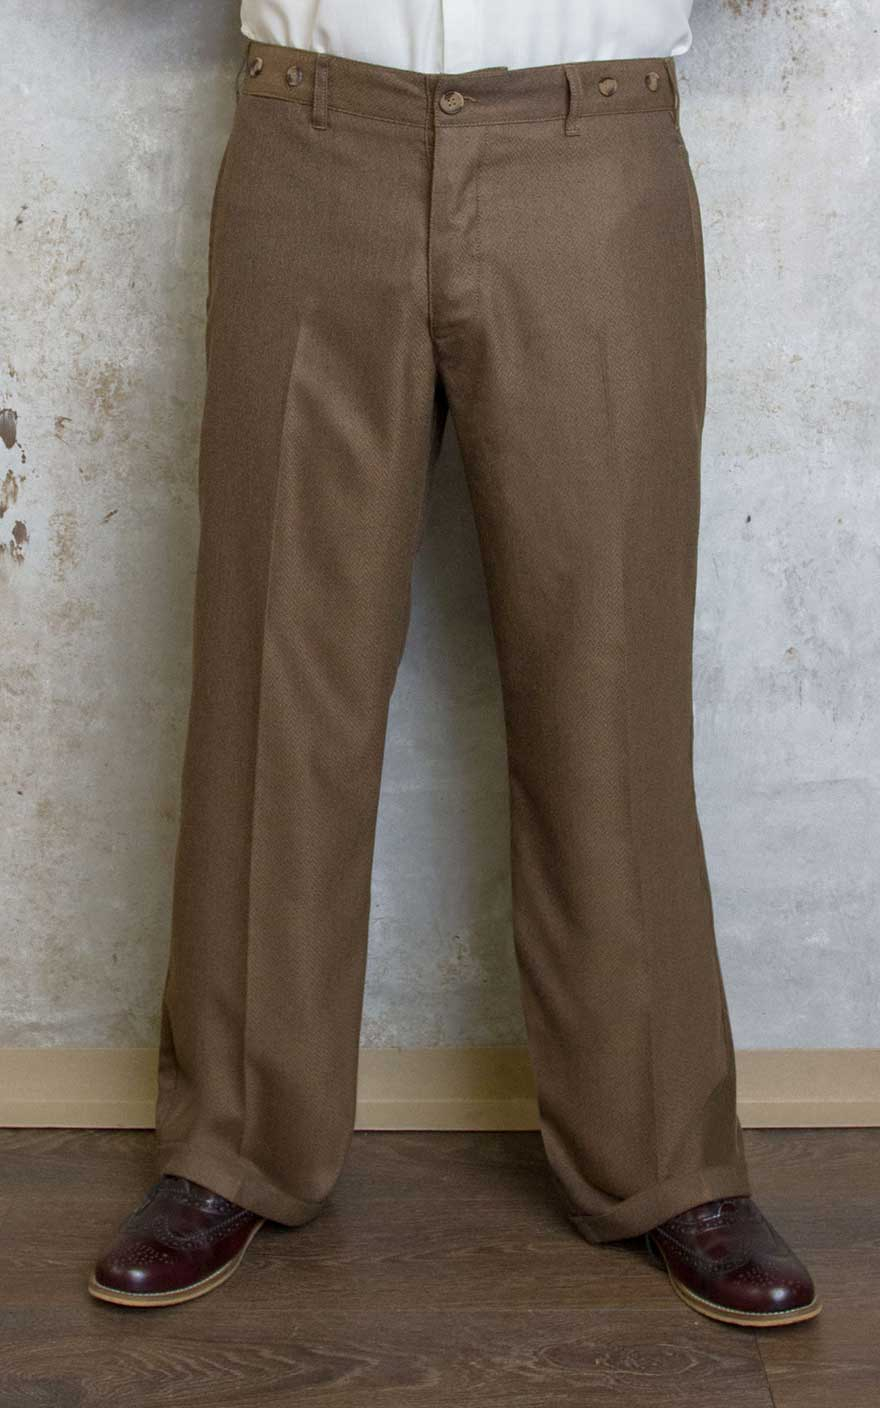 Rumble59 - Vintage Loose Fit Pants New Jersey - Fischgrat braun #36/36 von Rumble59